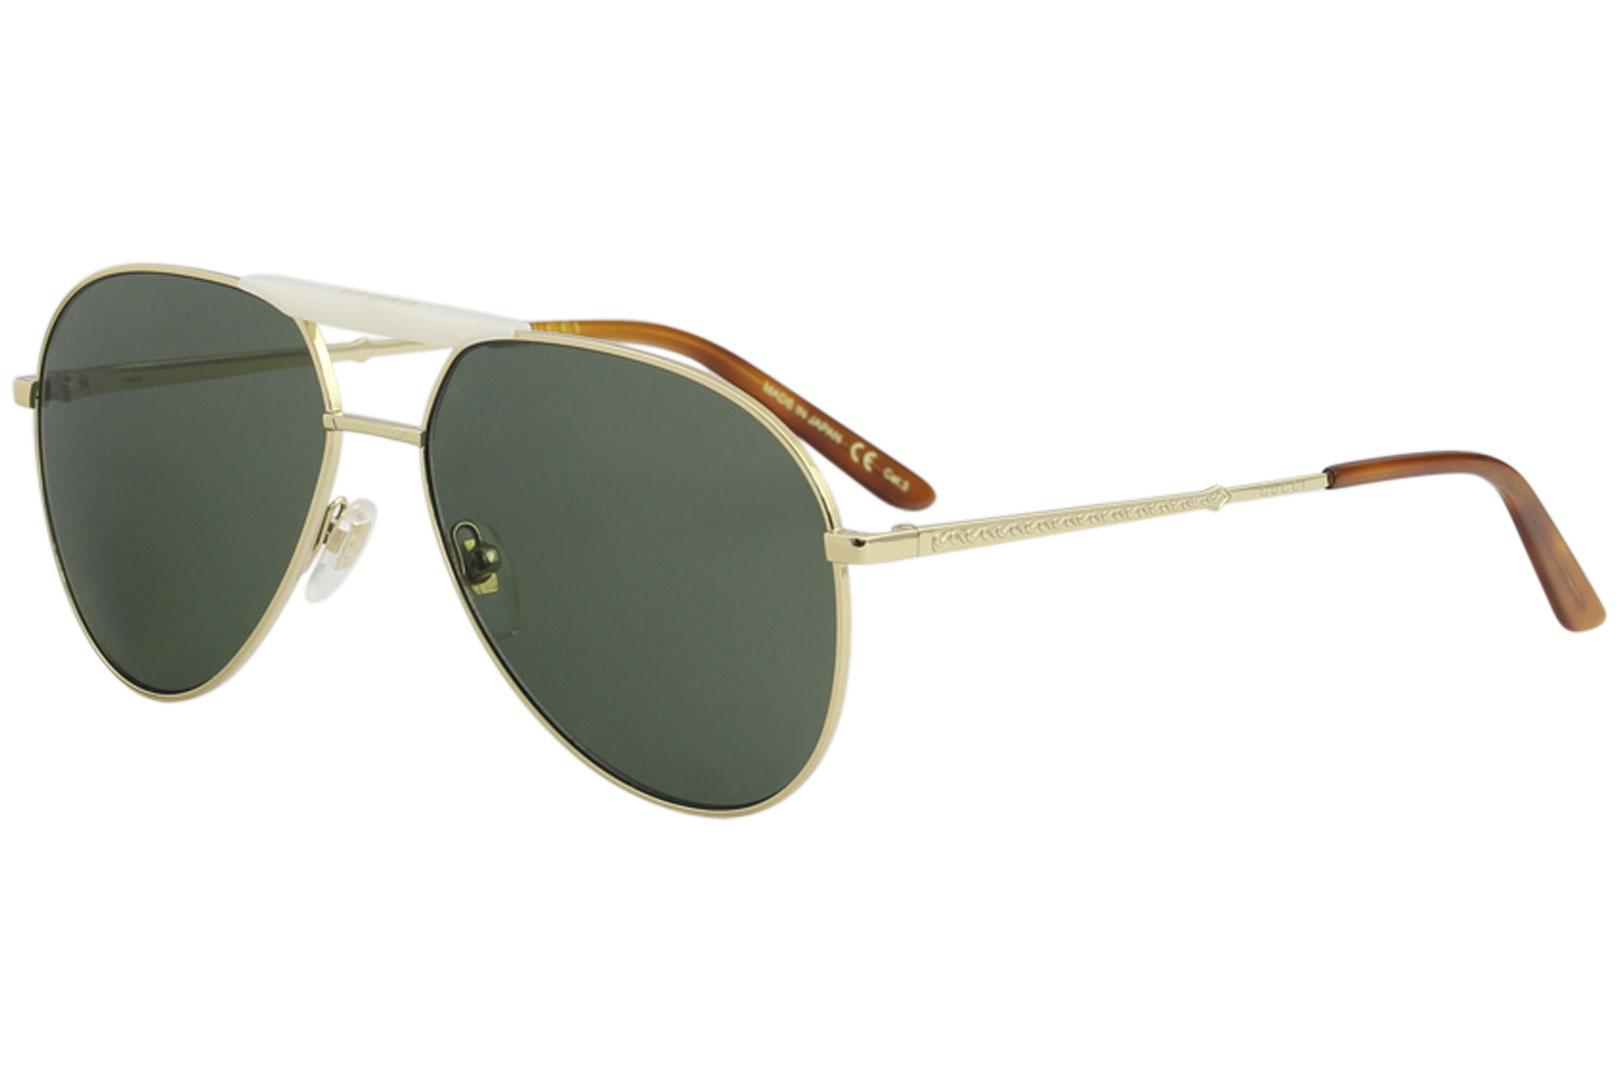 Gucci Men's GG0242S GG/0242/S Fashion Pilot Sunglasses - Gold/Green   003 - Lens 59 Bridge 15 Temple 145mm